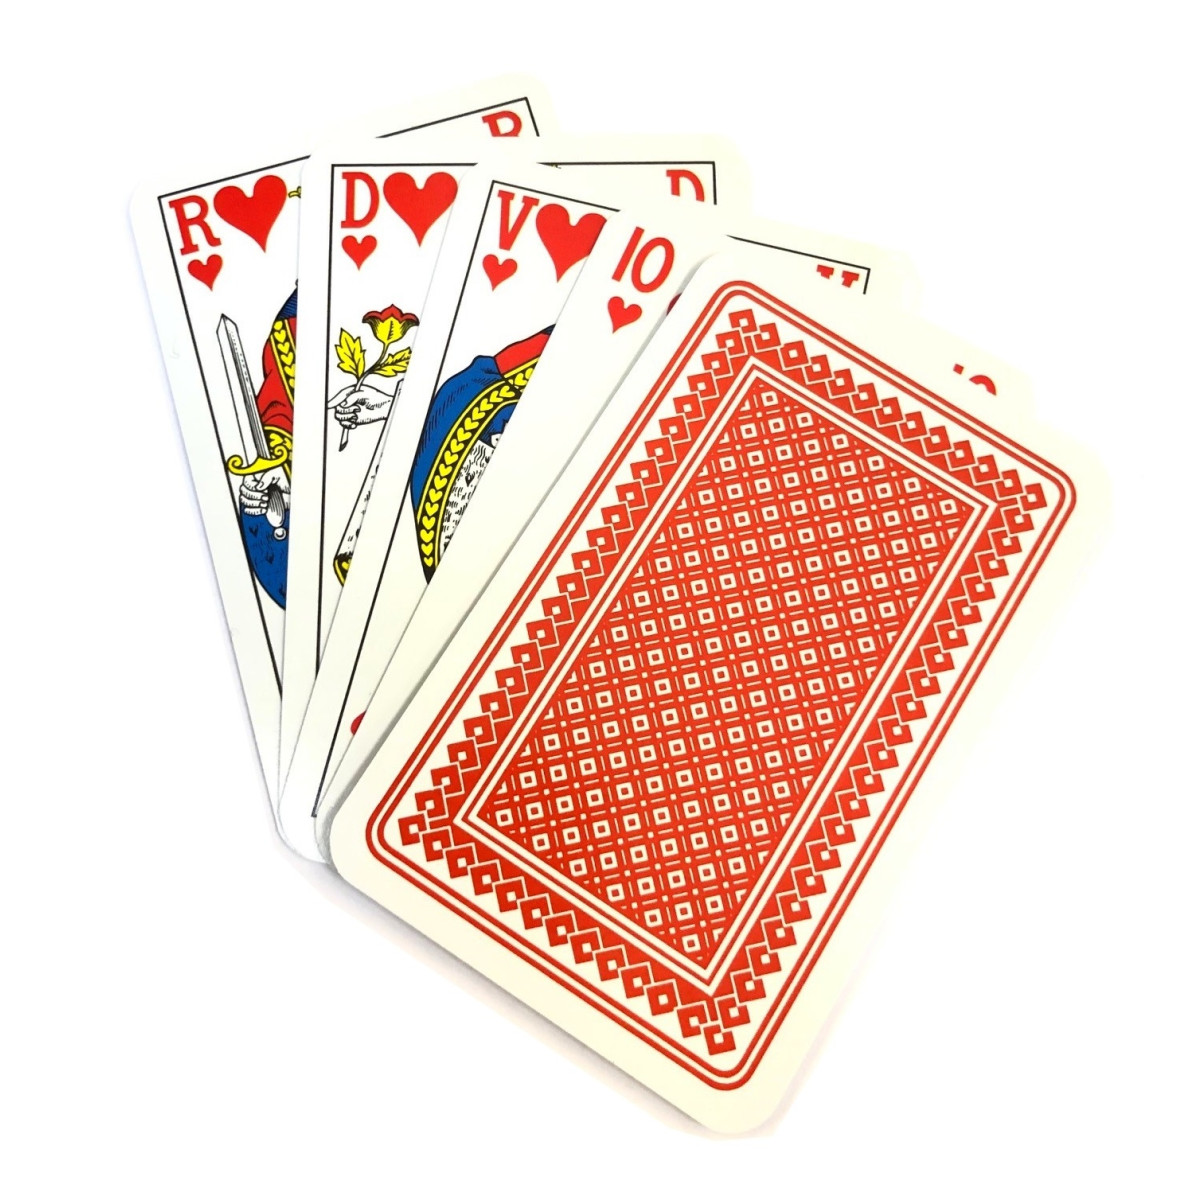 Uil homoseksueel mengsel Kaartspel Carlton 52 kaarten - frans - rood kopen op Amusement.be